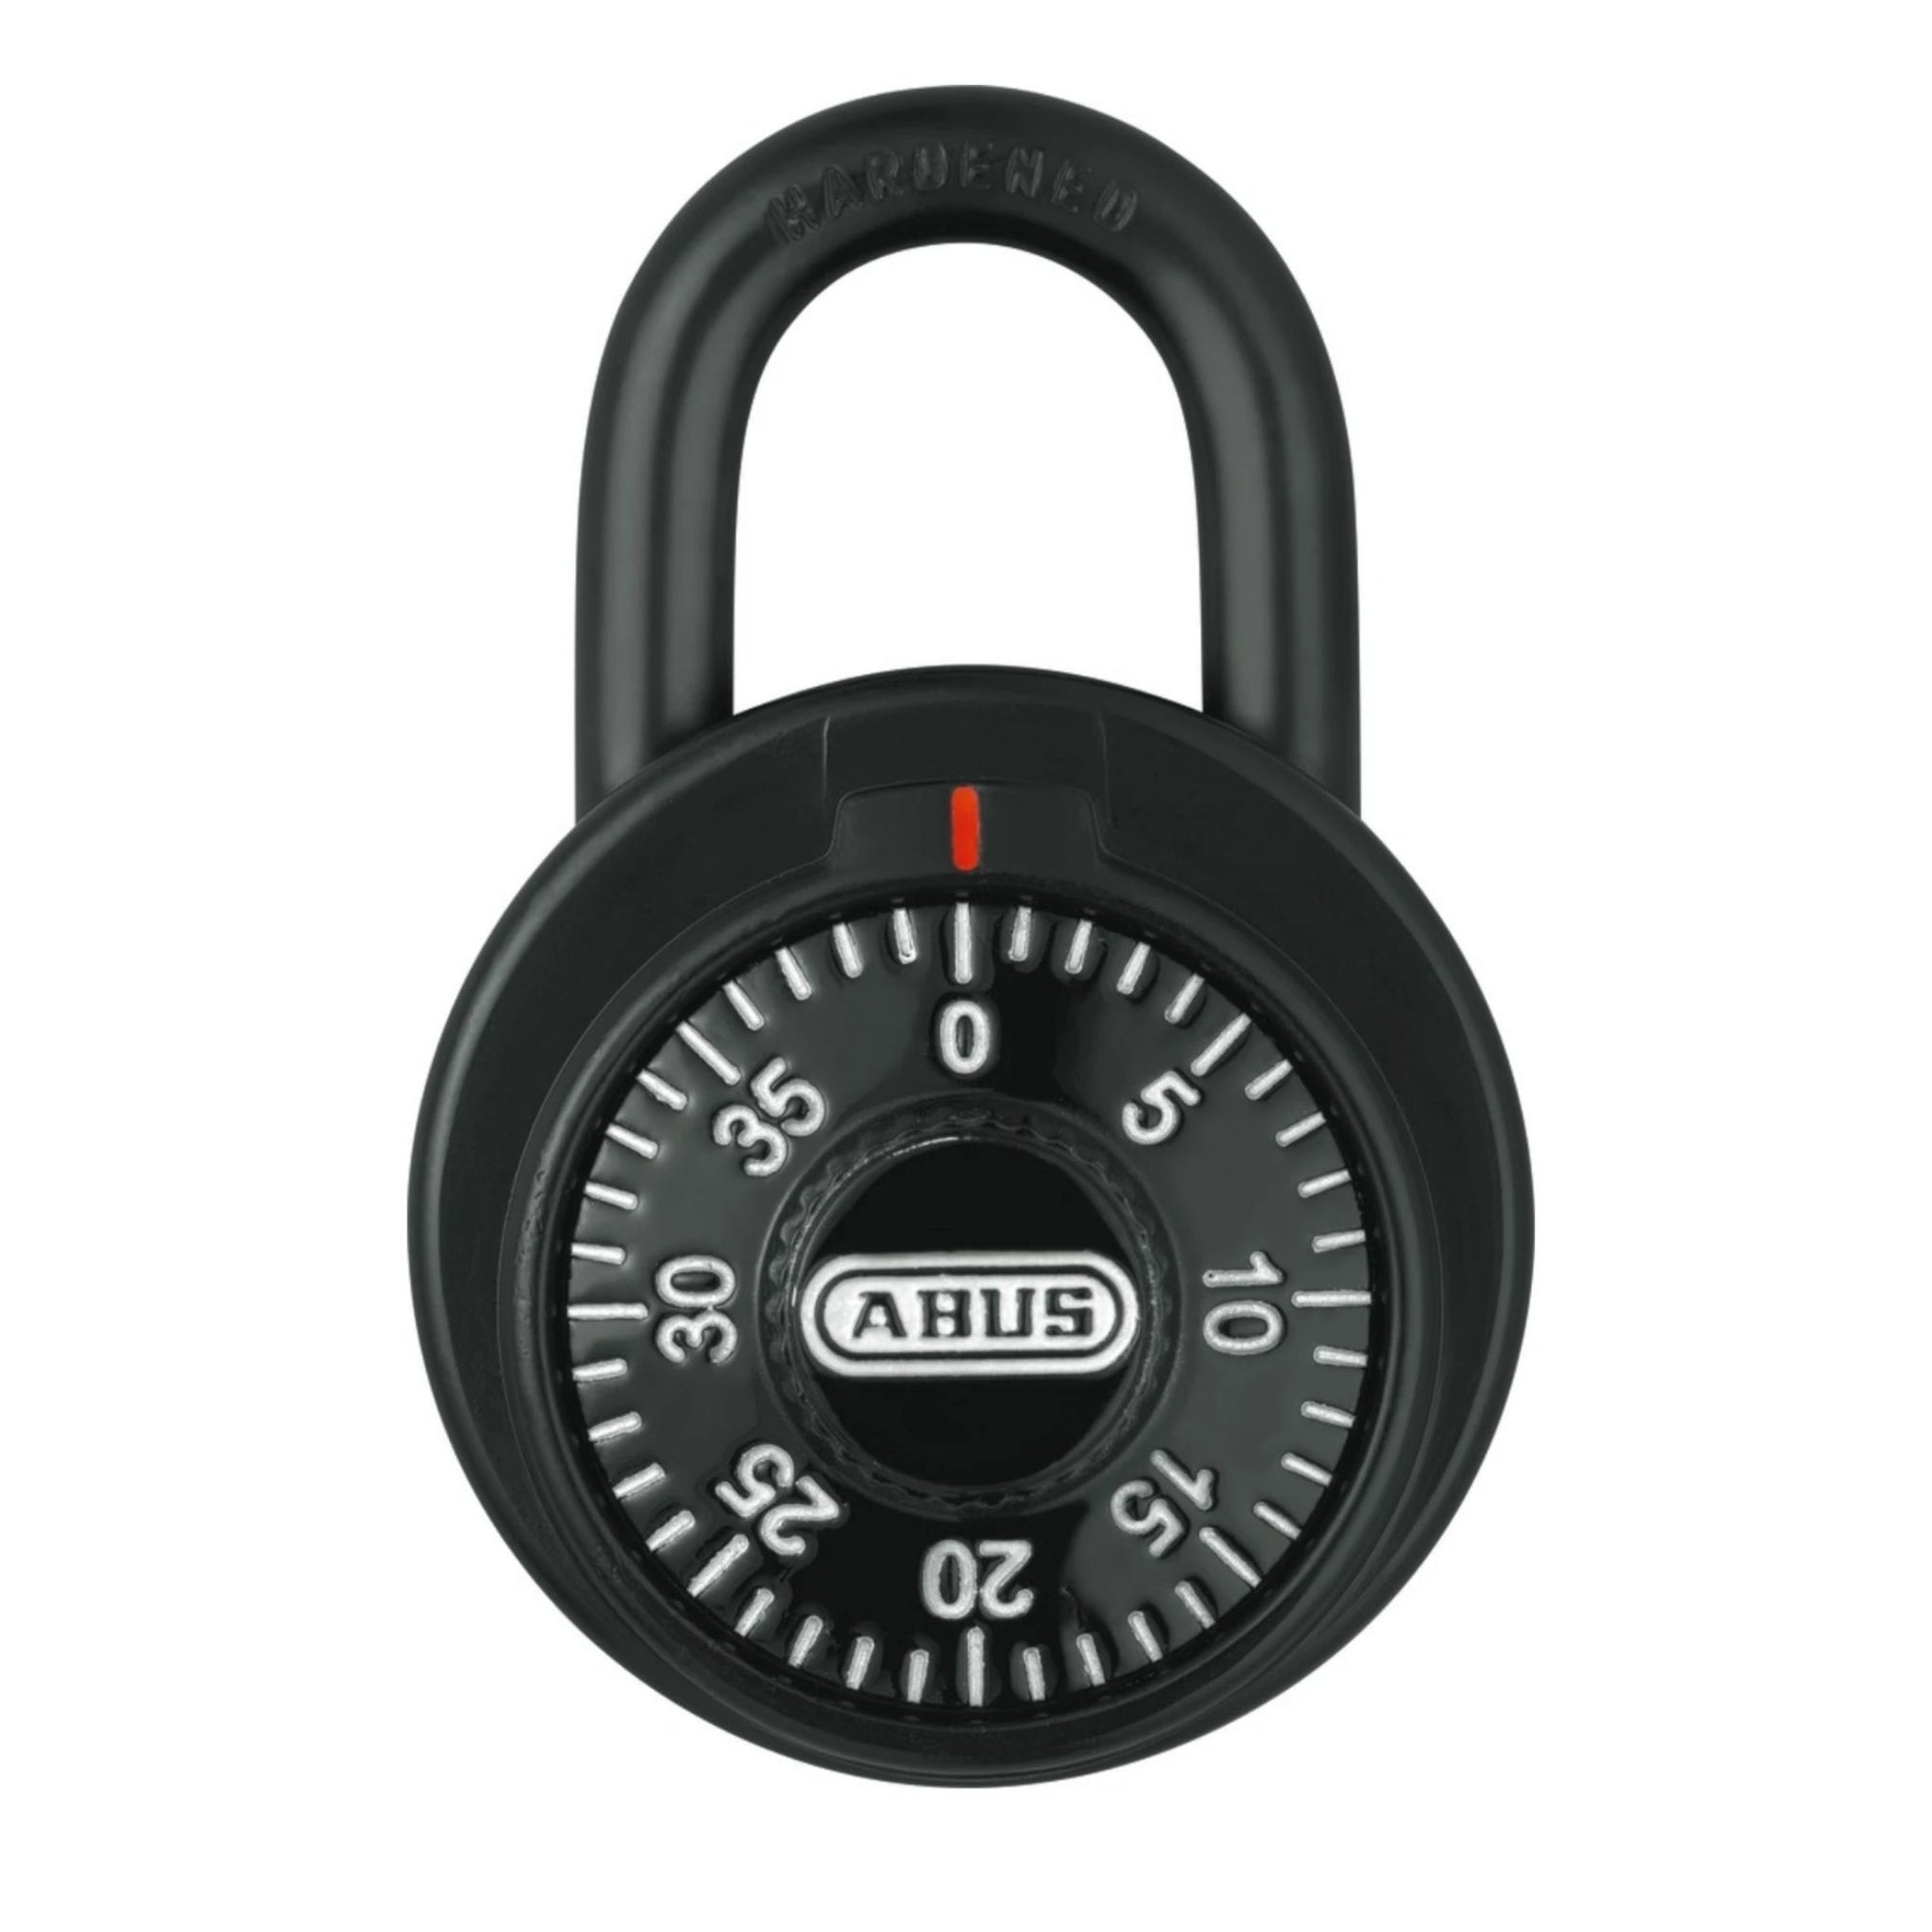 Abus 78/50 KC KA 976 Black Locker Padlock with Key Control Matched to Key Number KA976 - The Lock Source